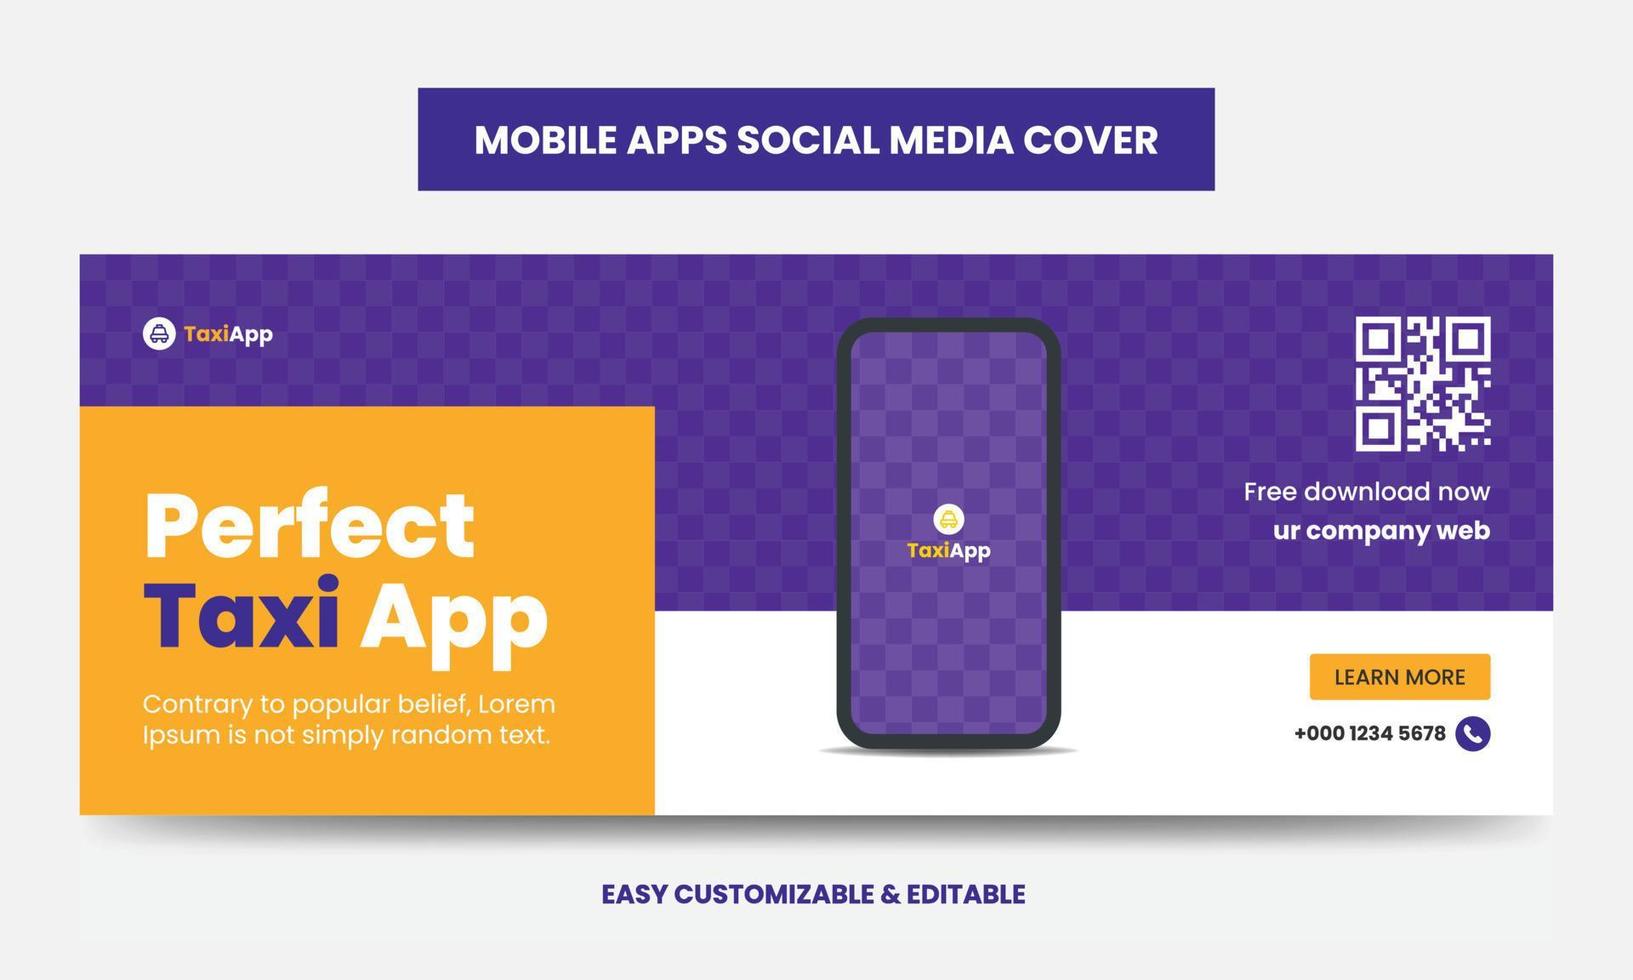 Mobile app marketing social media cover photo template. Taxi app social media timeline web banner vector